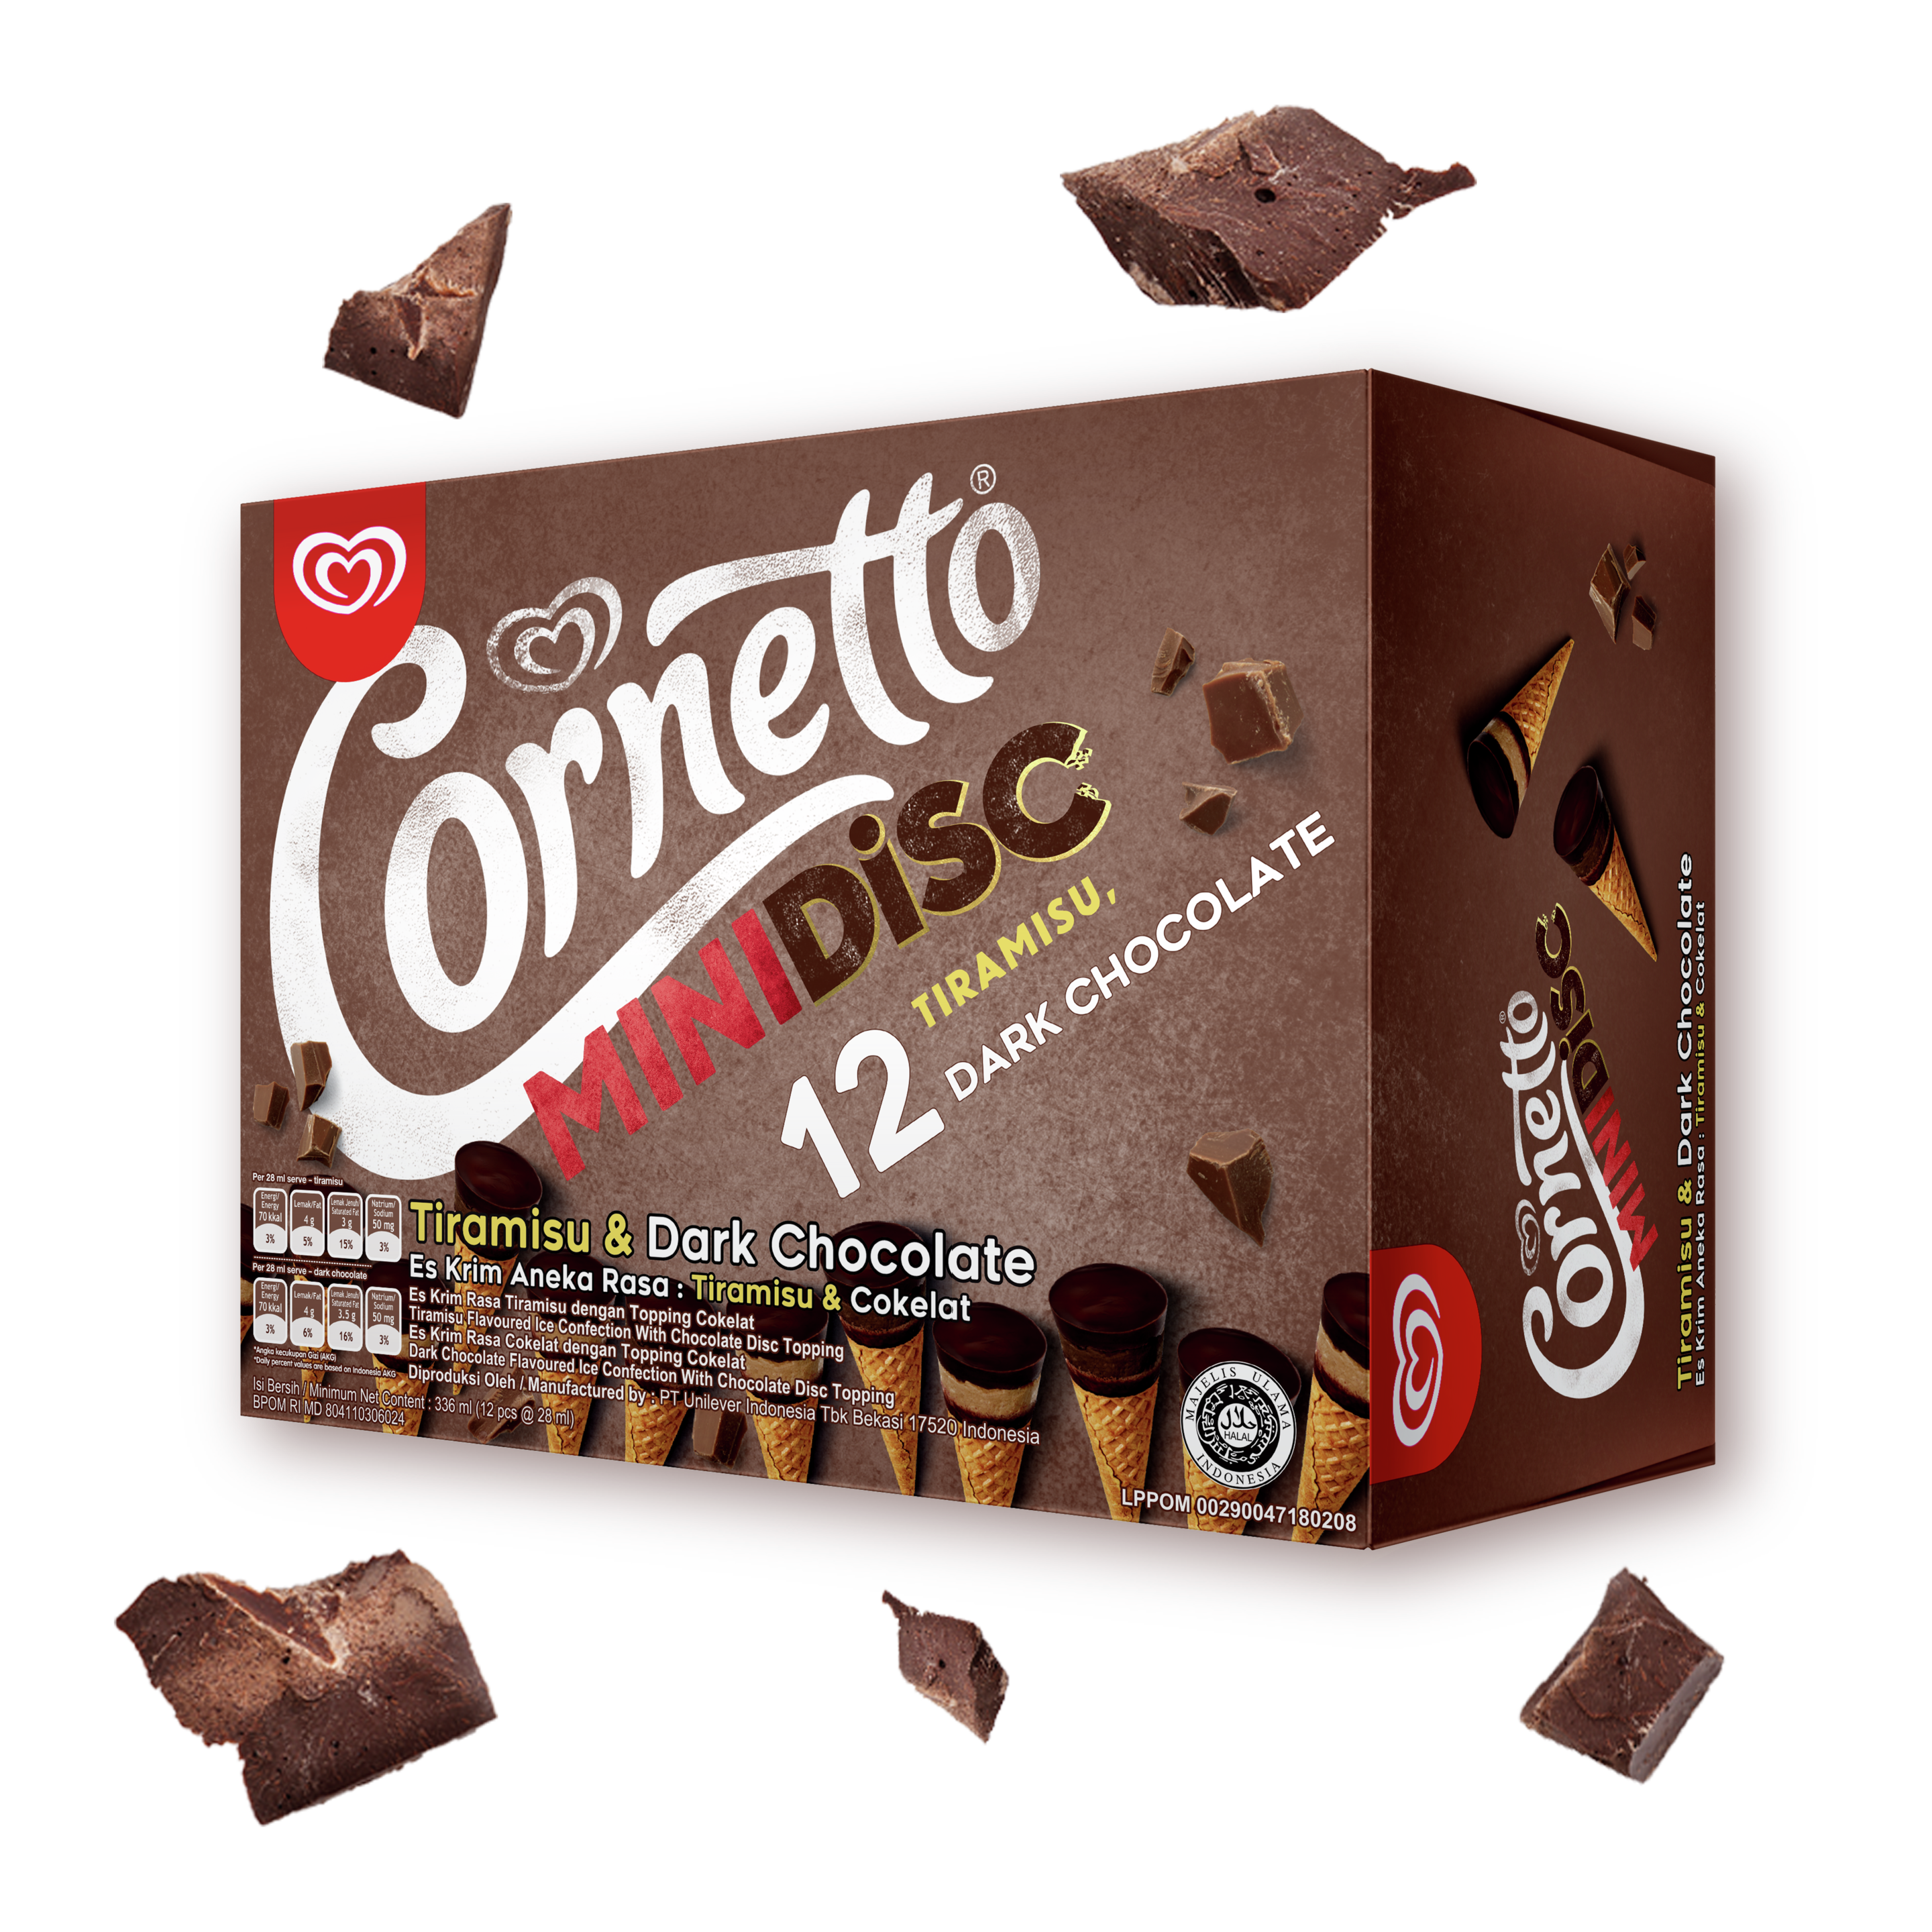 Cornetto Mini Chocolate & Es Krim Tiramisu